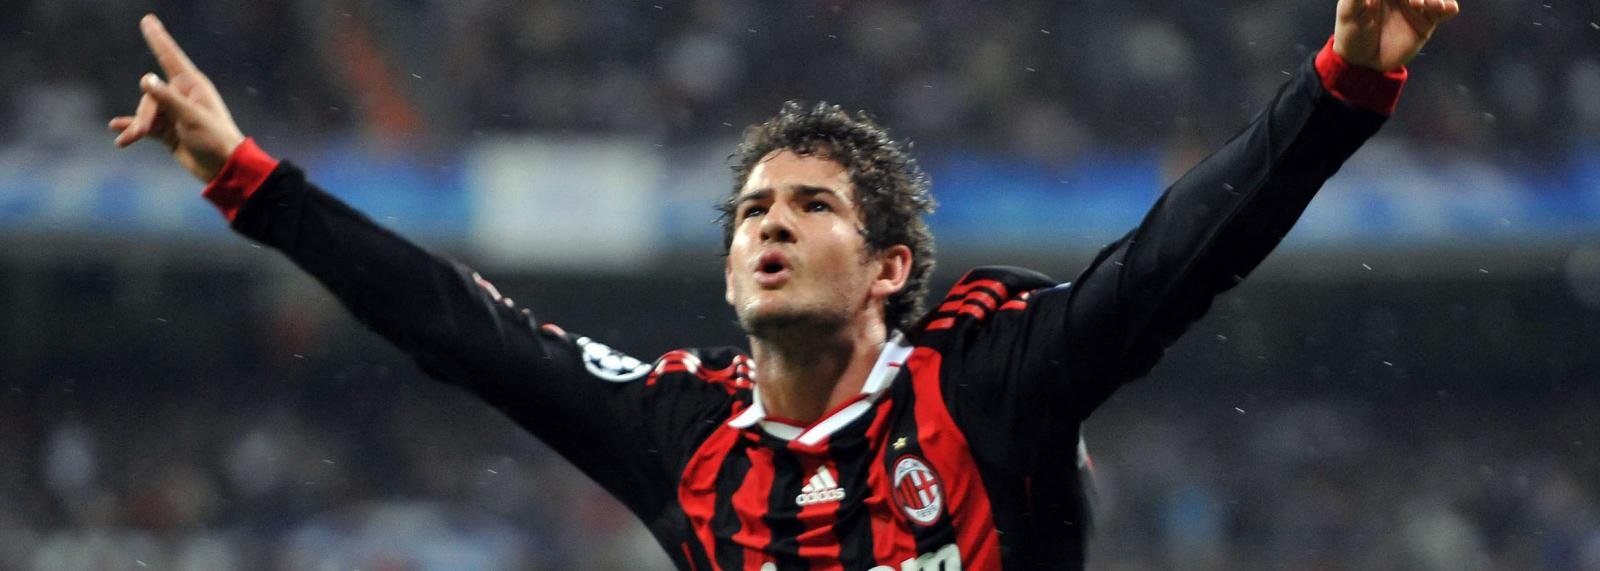 Chelsea plotting £10m bid for ex-AC Milan star striker